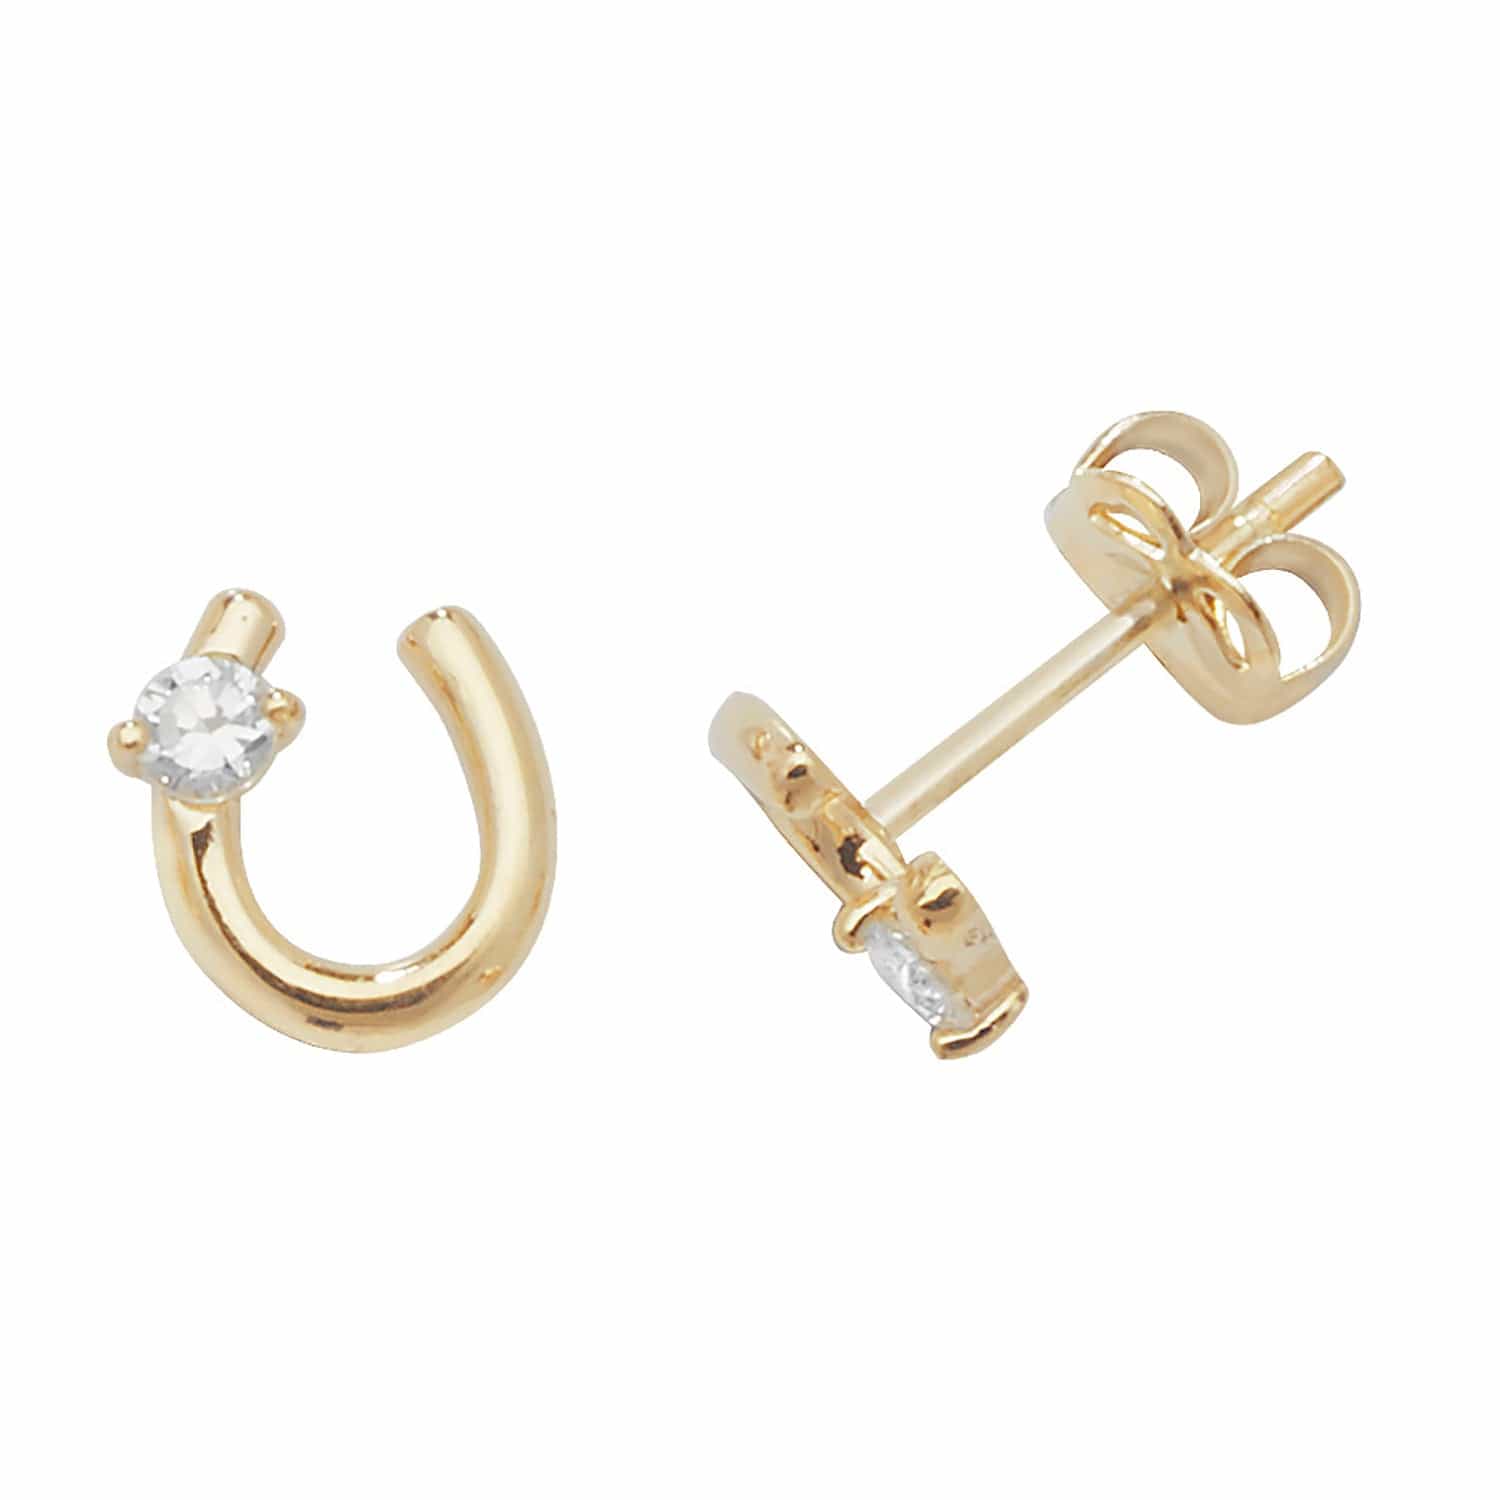 PEGASUS JEWELLERY Earrings 9ct Gold Horseshoe Earrings